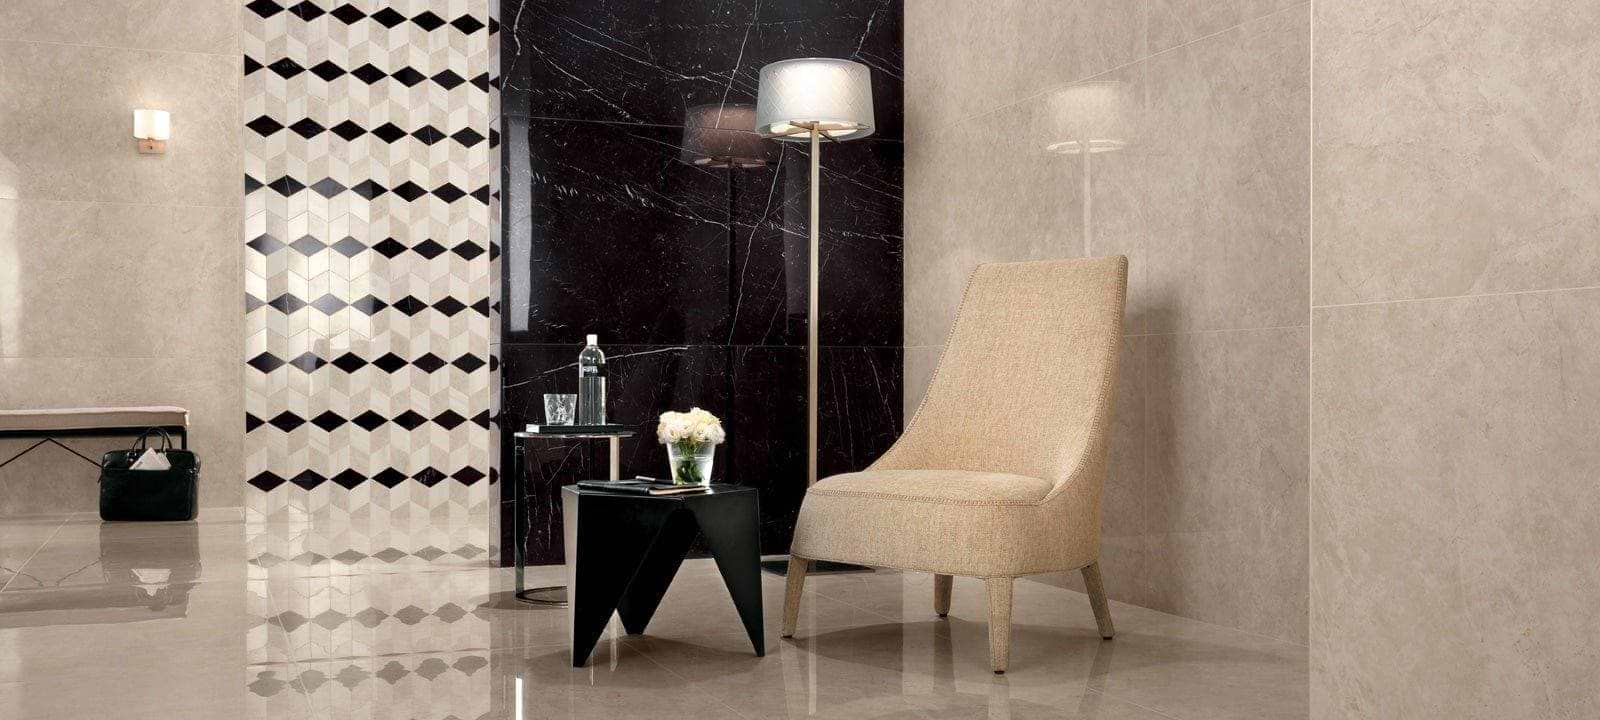 Minoli Wall & Floor Tiles 30 x 60 x 0.9cm Marvel Cream Prestige Matt 30 x 60cm